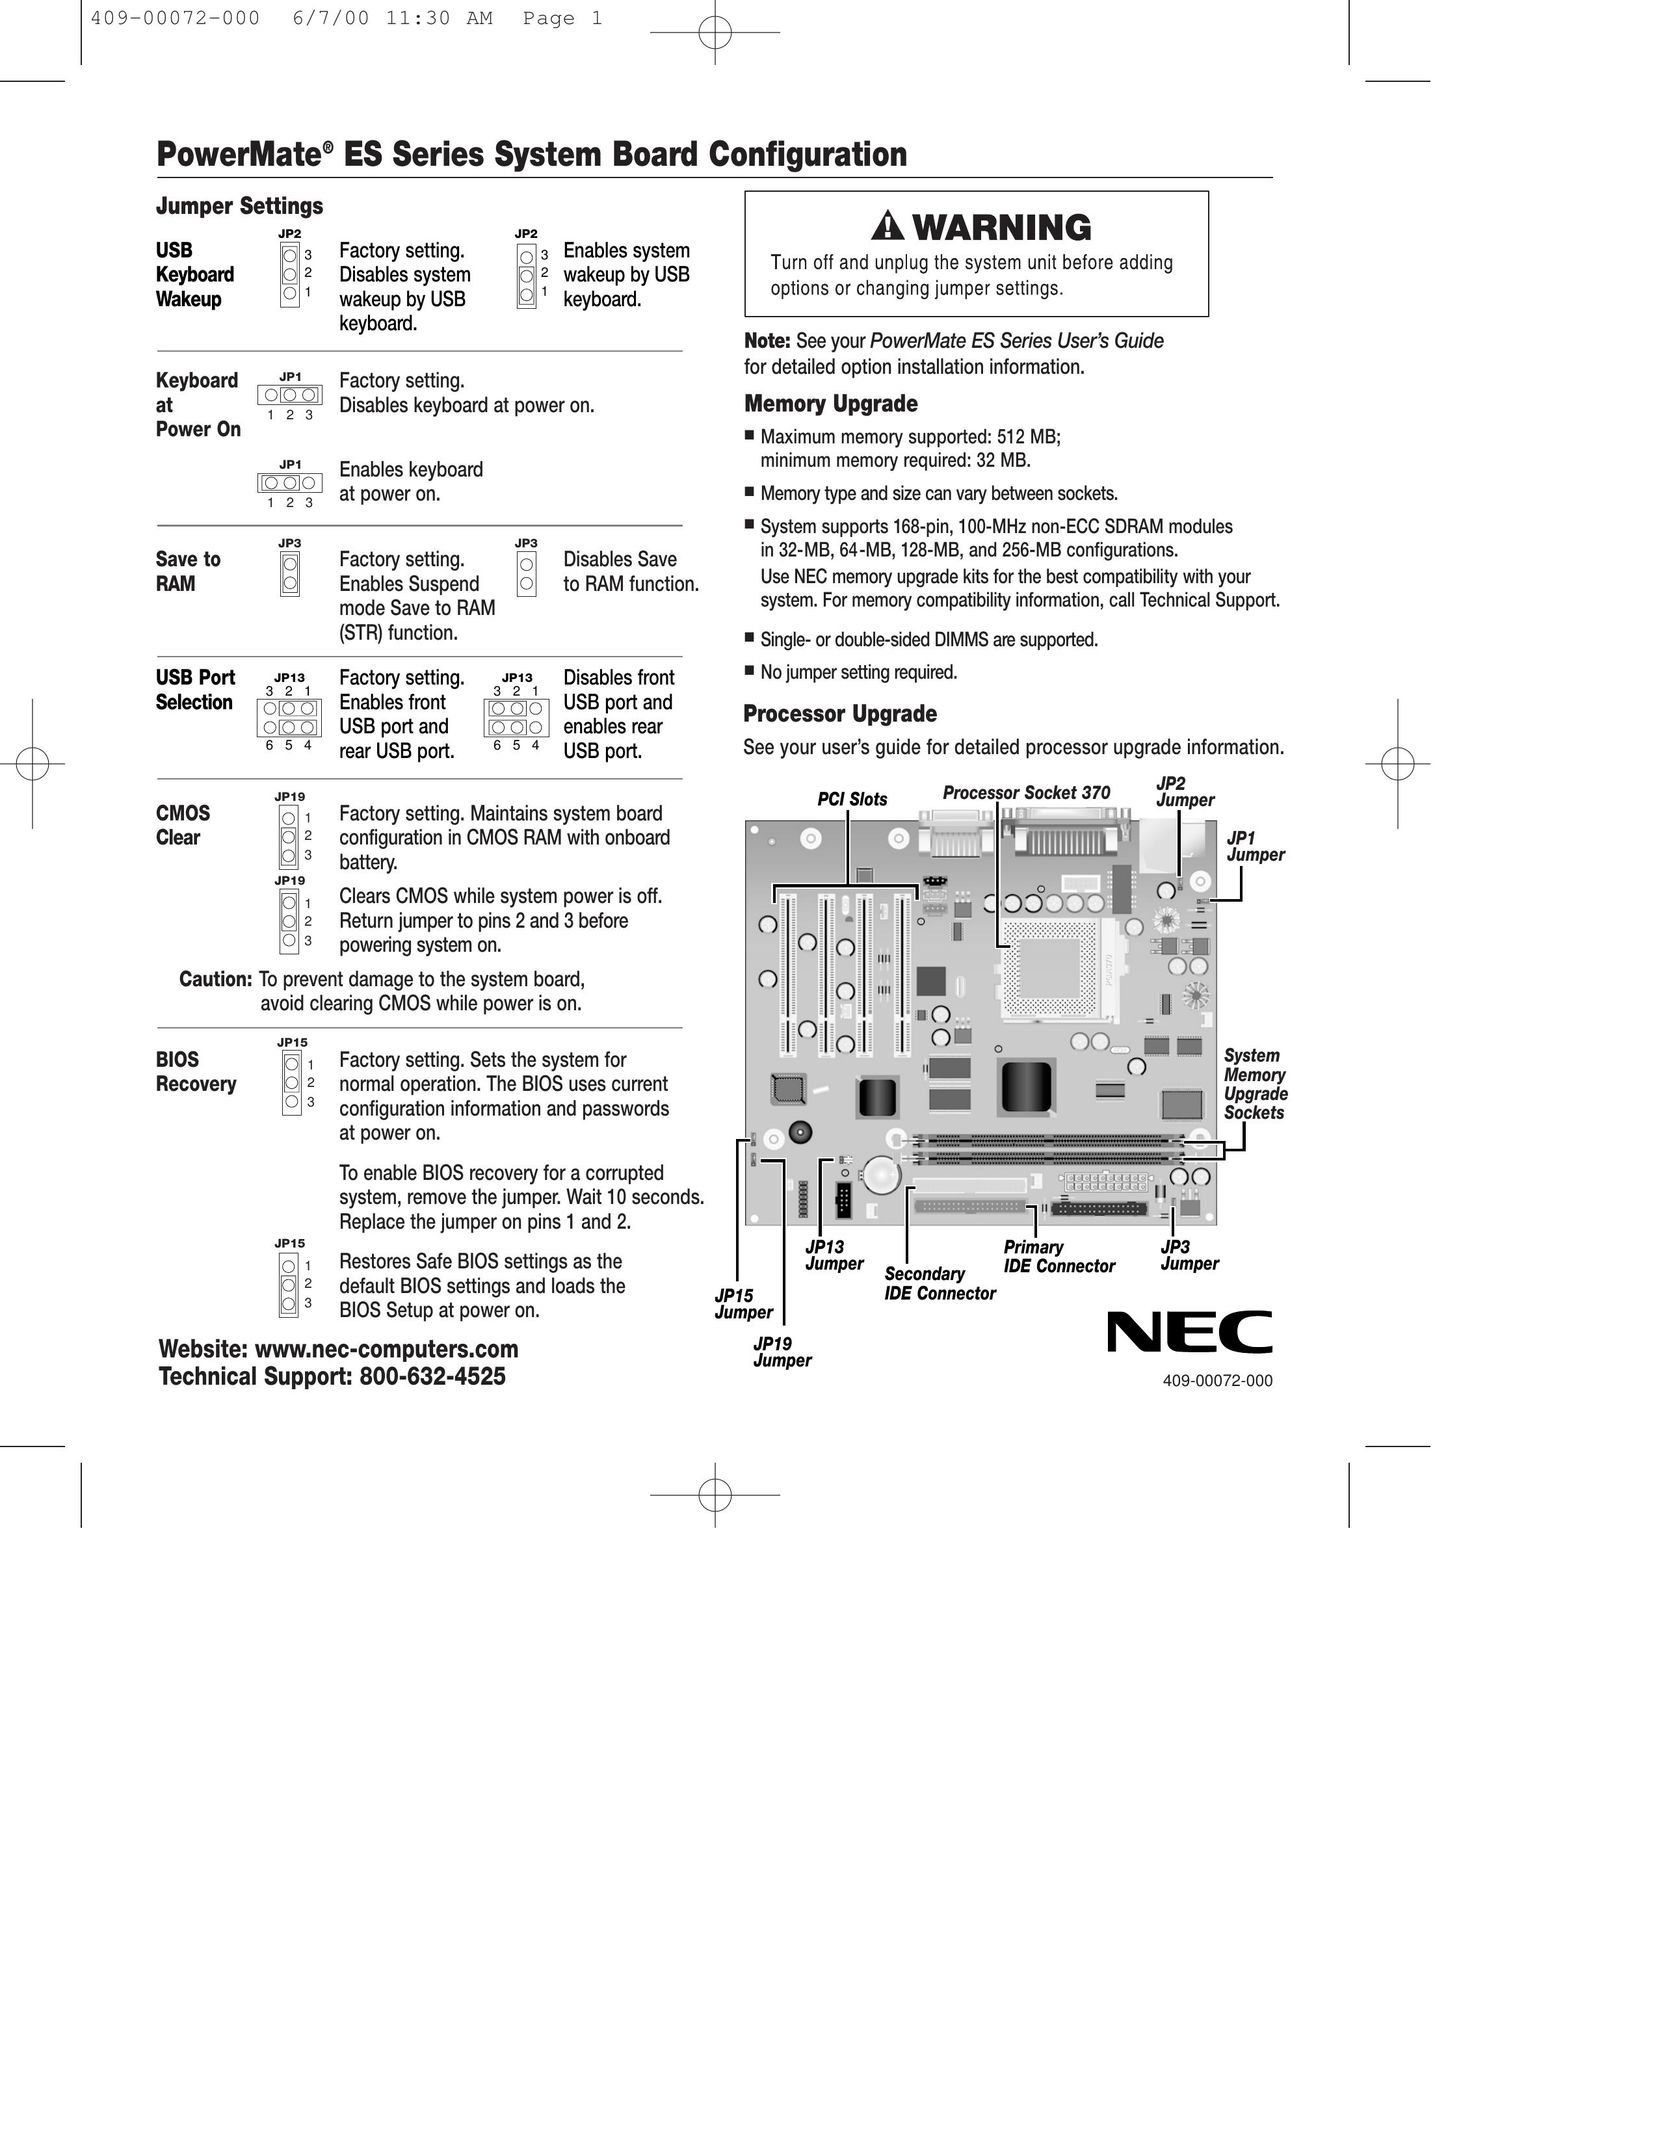 NEC ES Series Computer Hardware User Manual